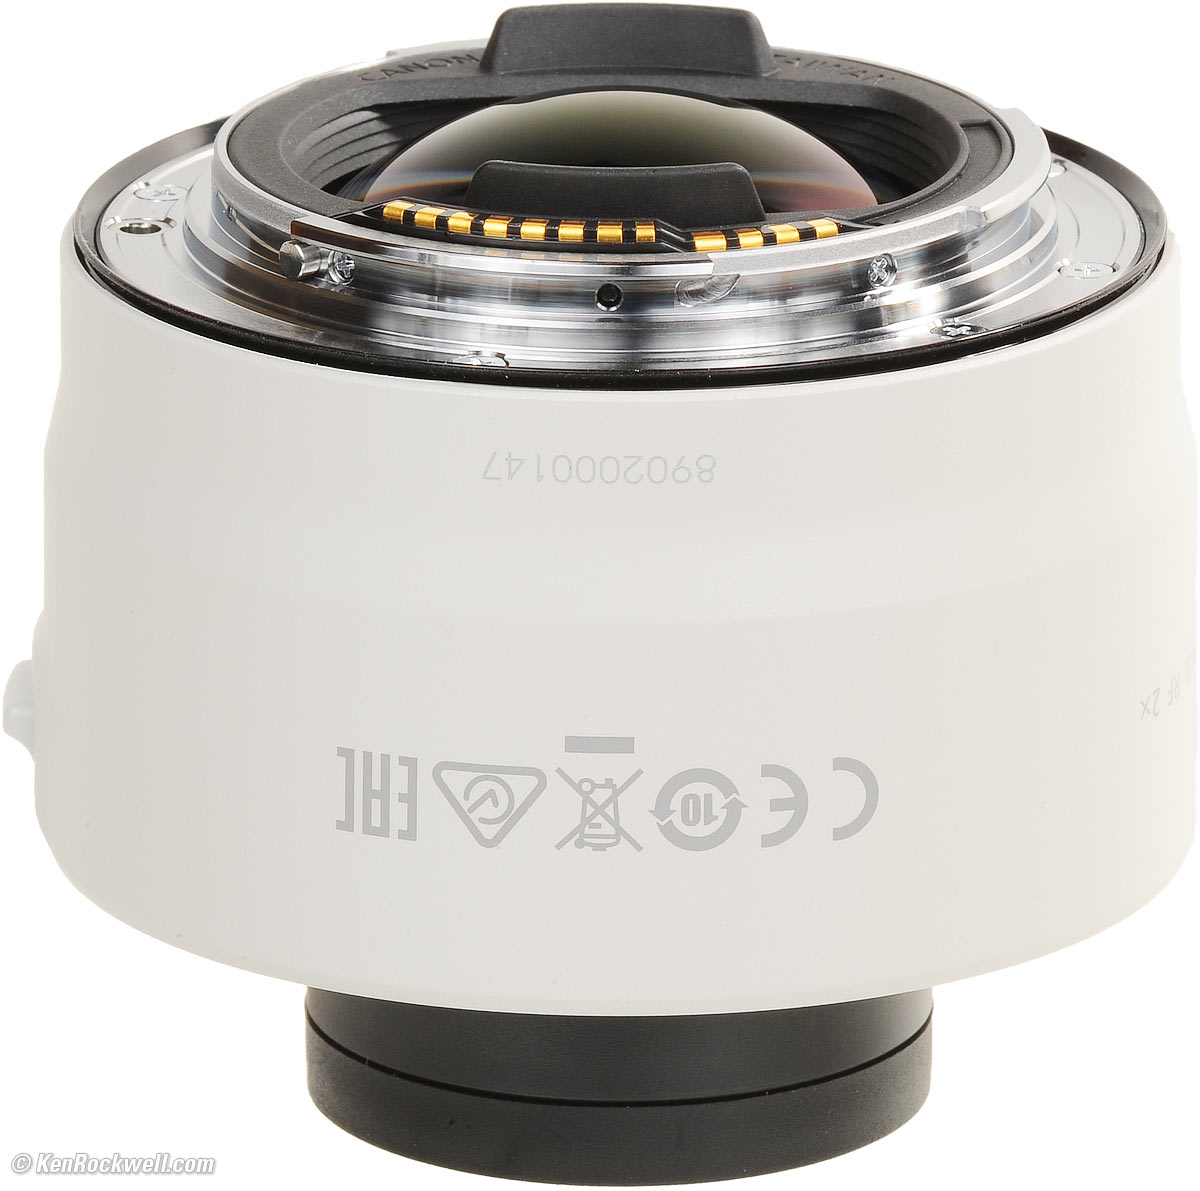 Canon RF 2x Extender Teleconverter Review